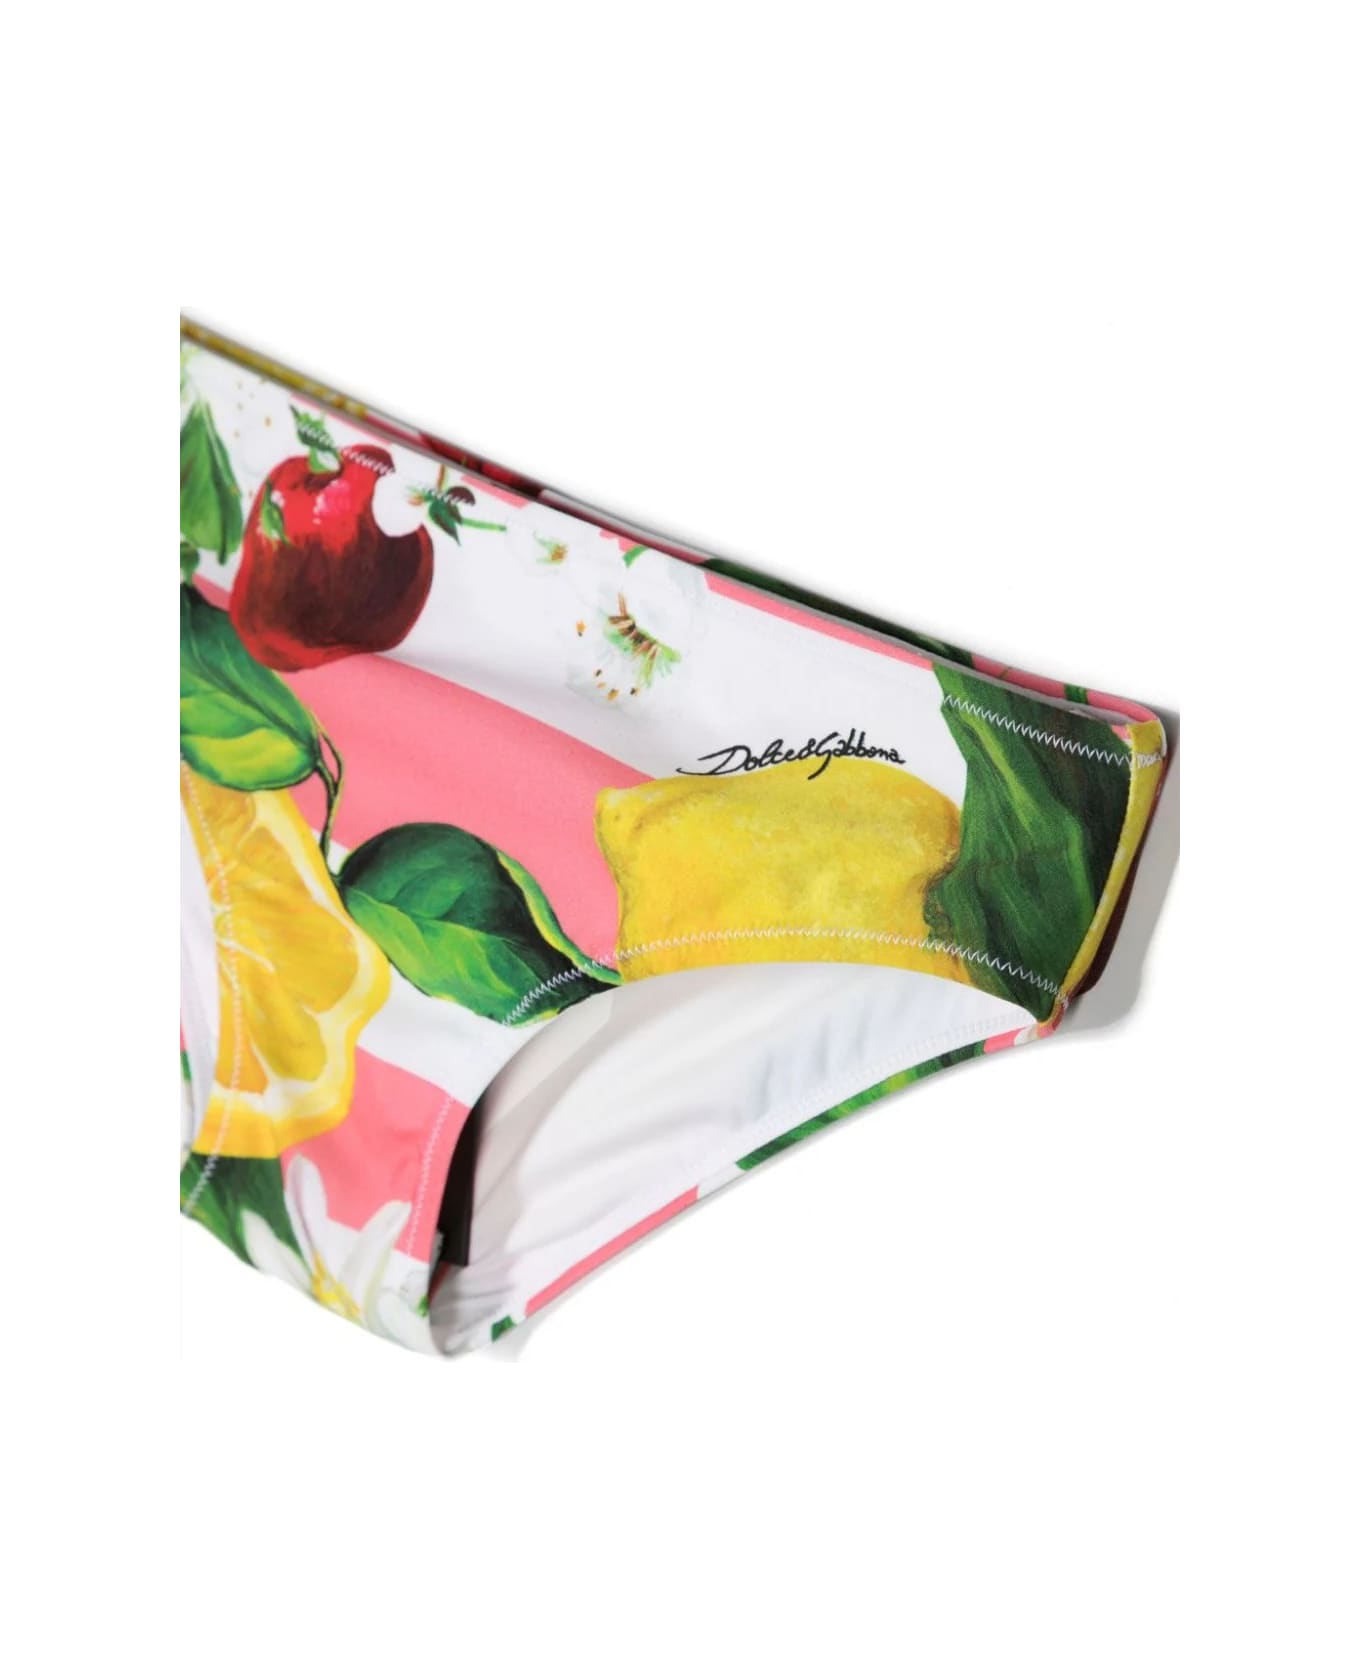 Dolce & Gabbana Stretch Fabric Bikini With Lemon And Cherry Print - Multicolour 水着